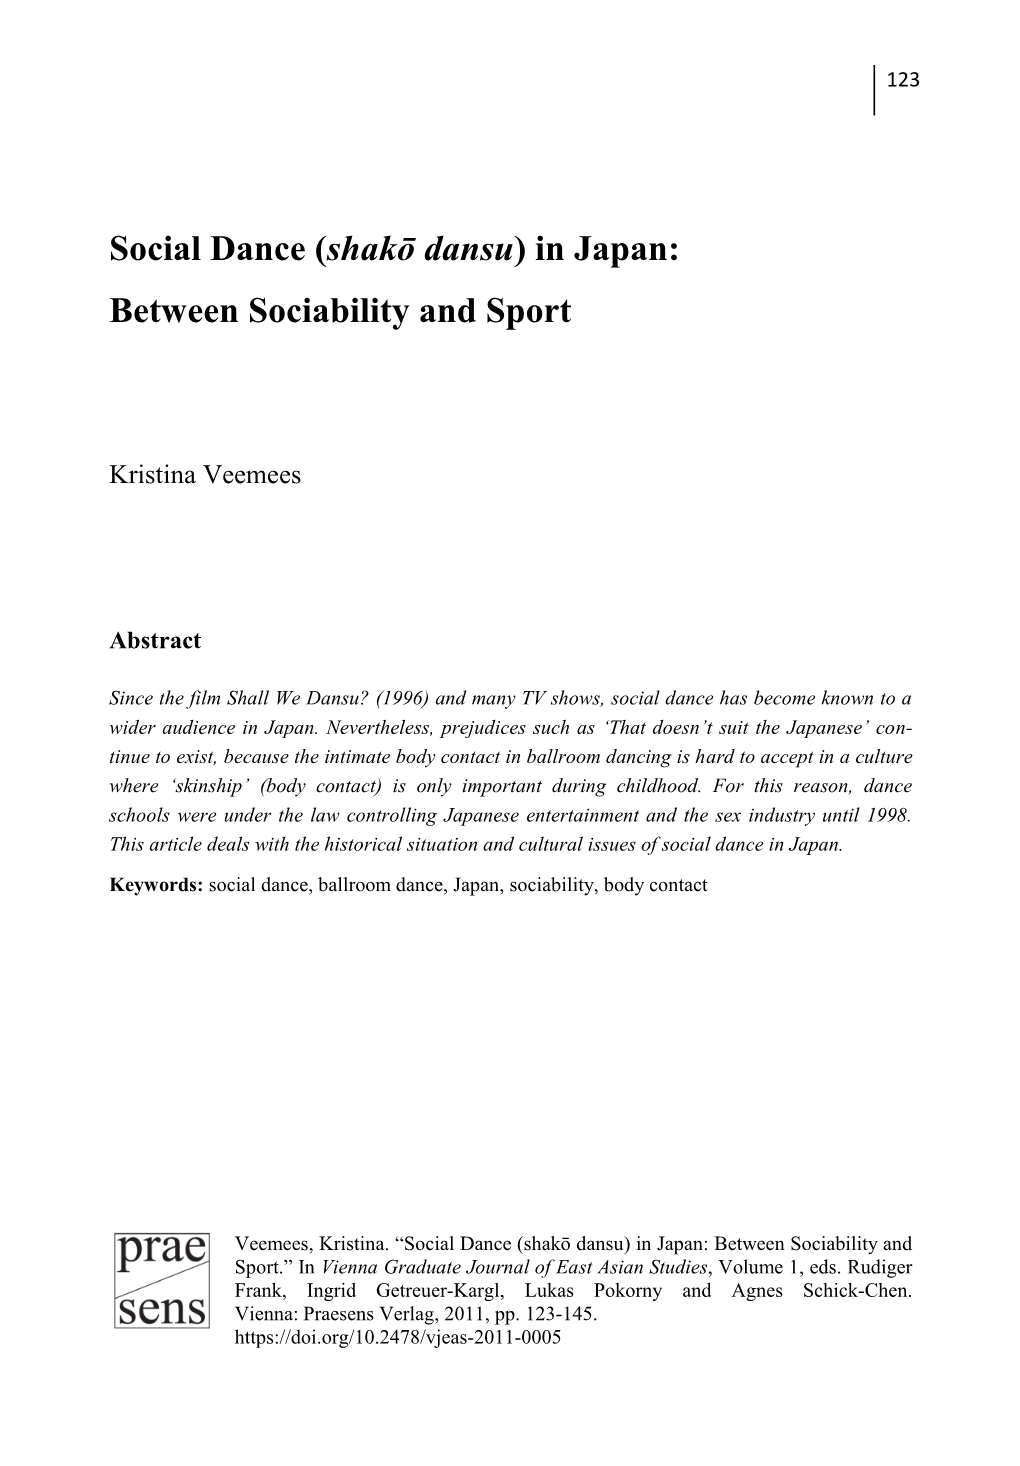 Social Dance (Shakō Dansu) in Japan: Between Sociability and Sport